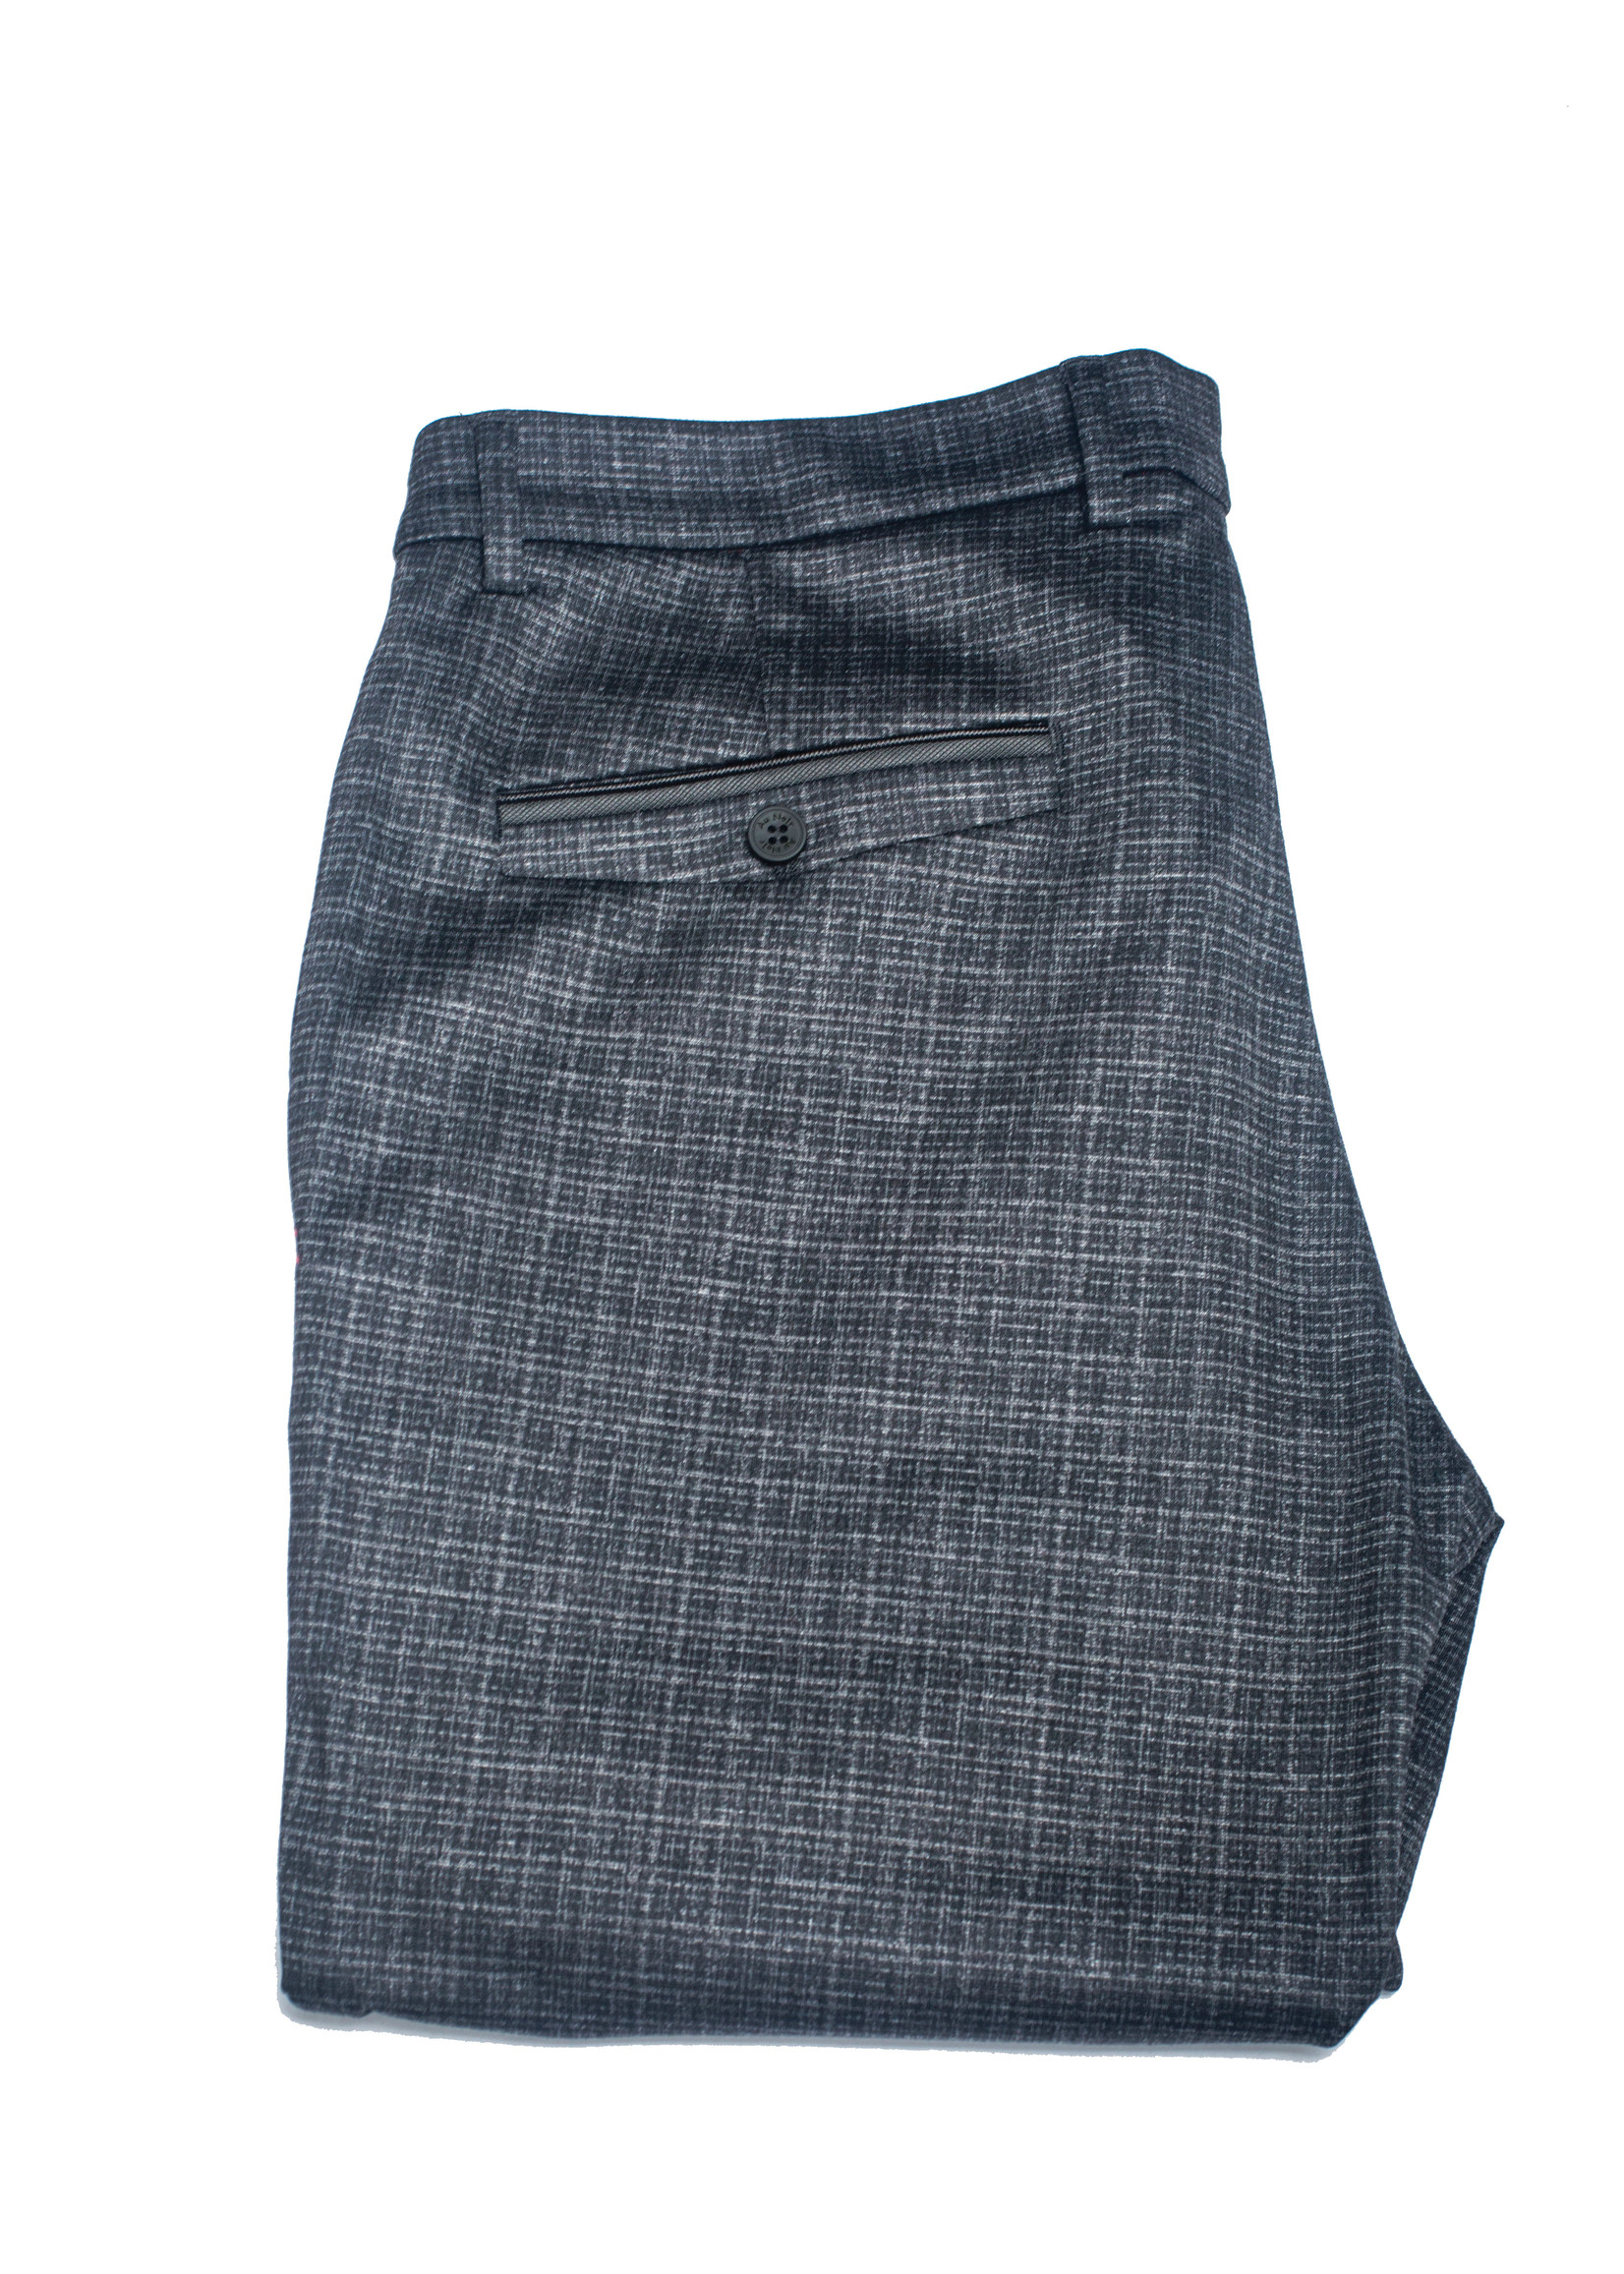 AU NOIR Men's Beretta-Holland dress trousers